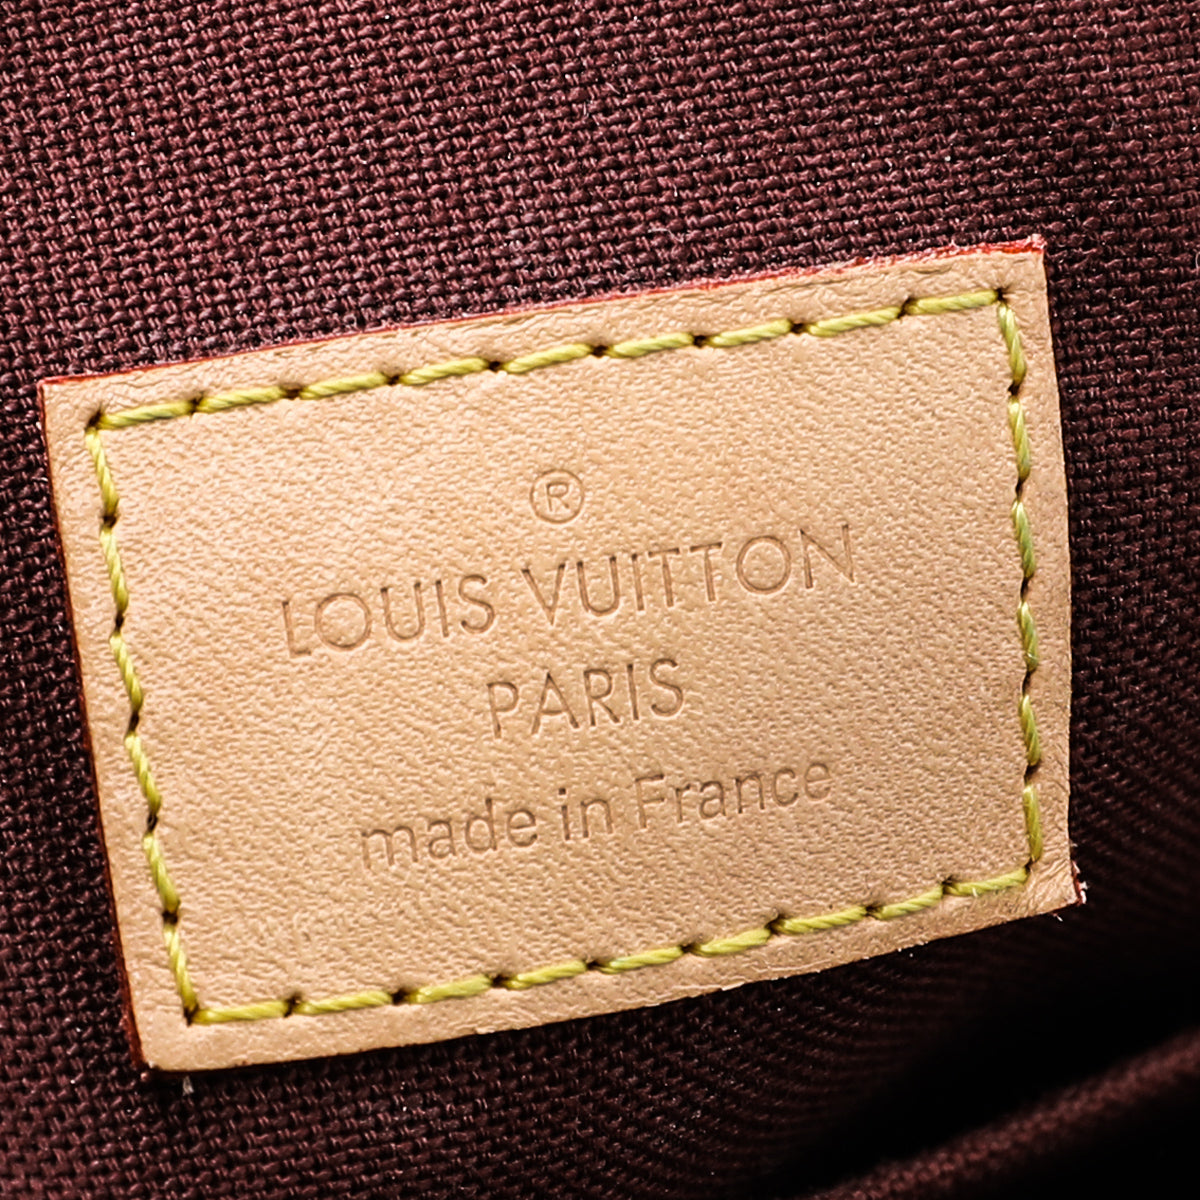 Louis Vuitton Rivoli PM Bag - Couture USA